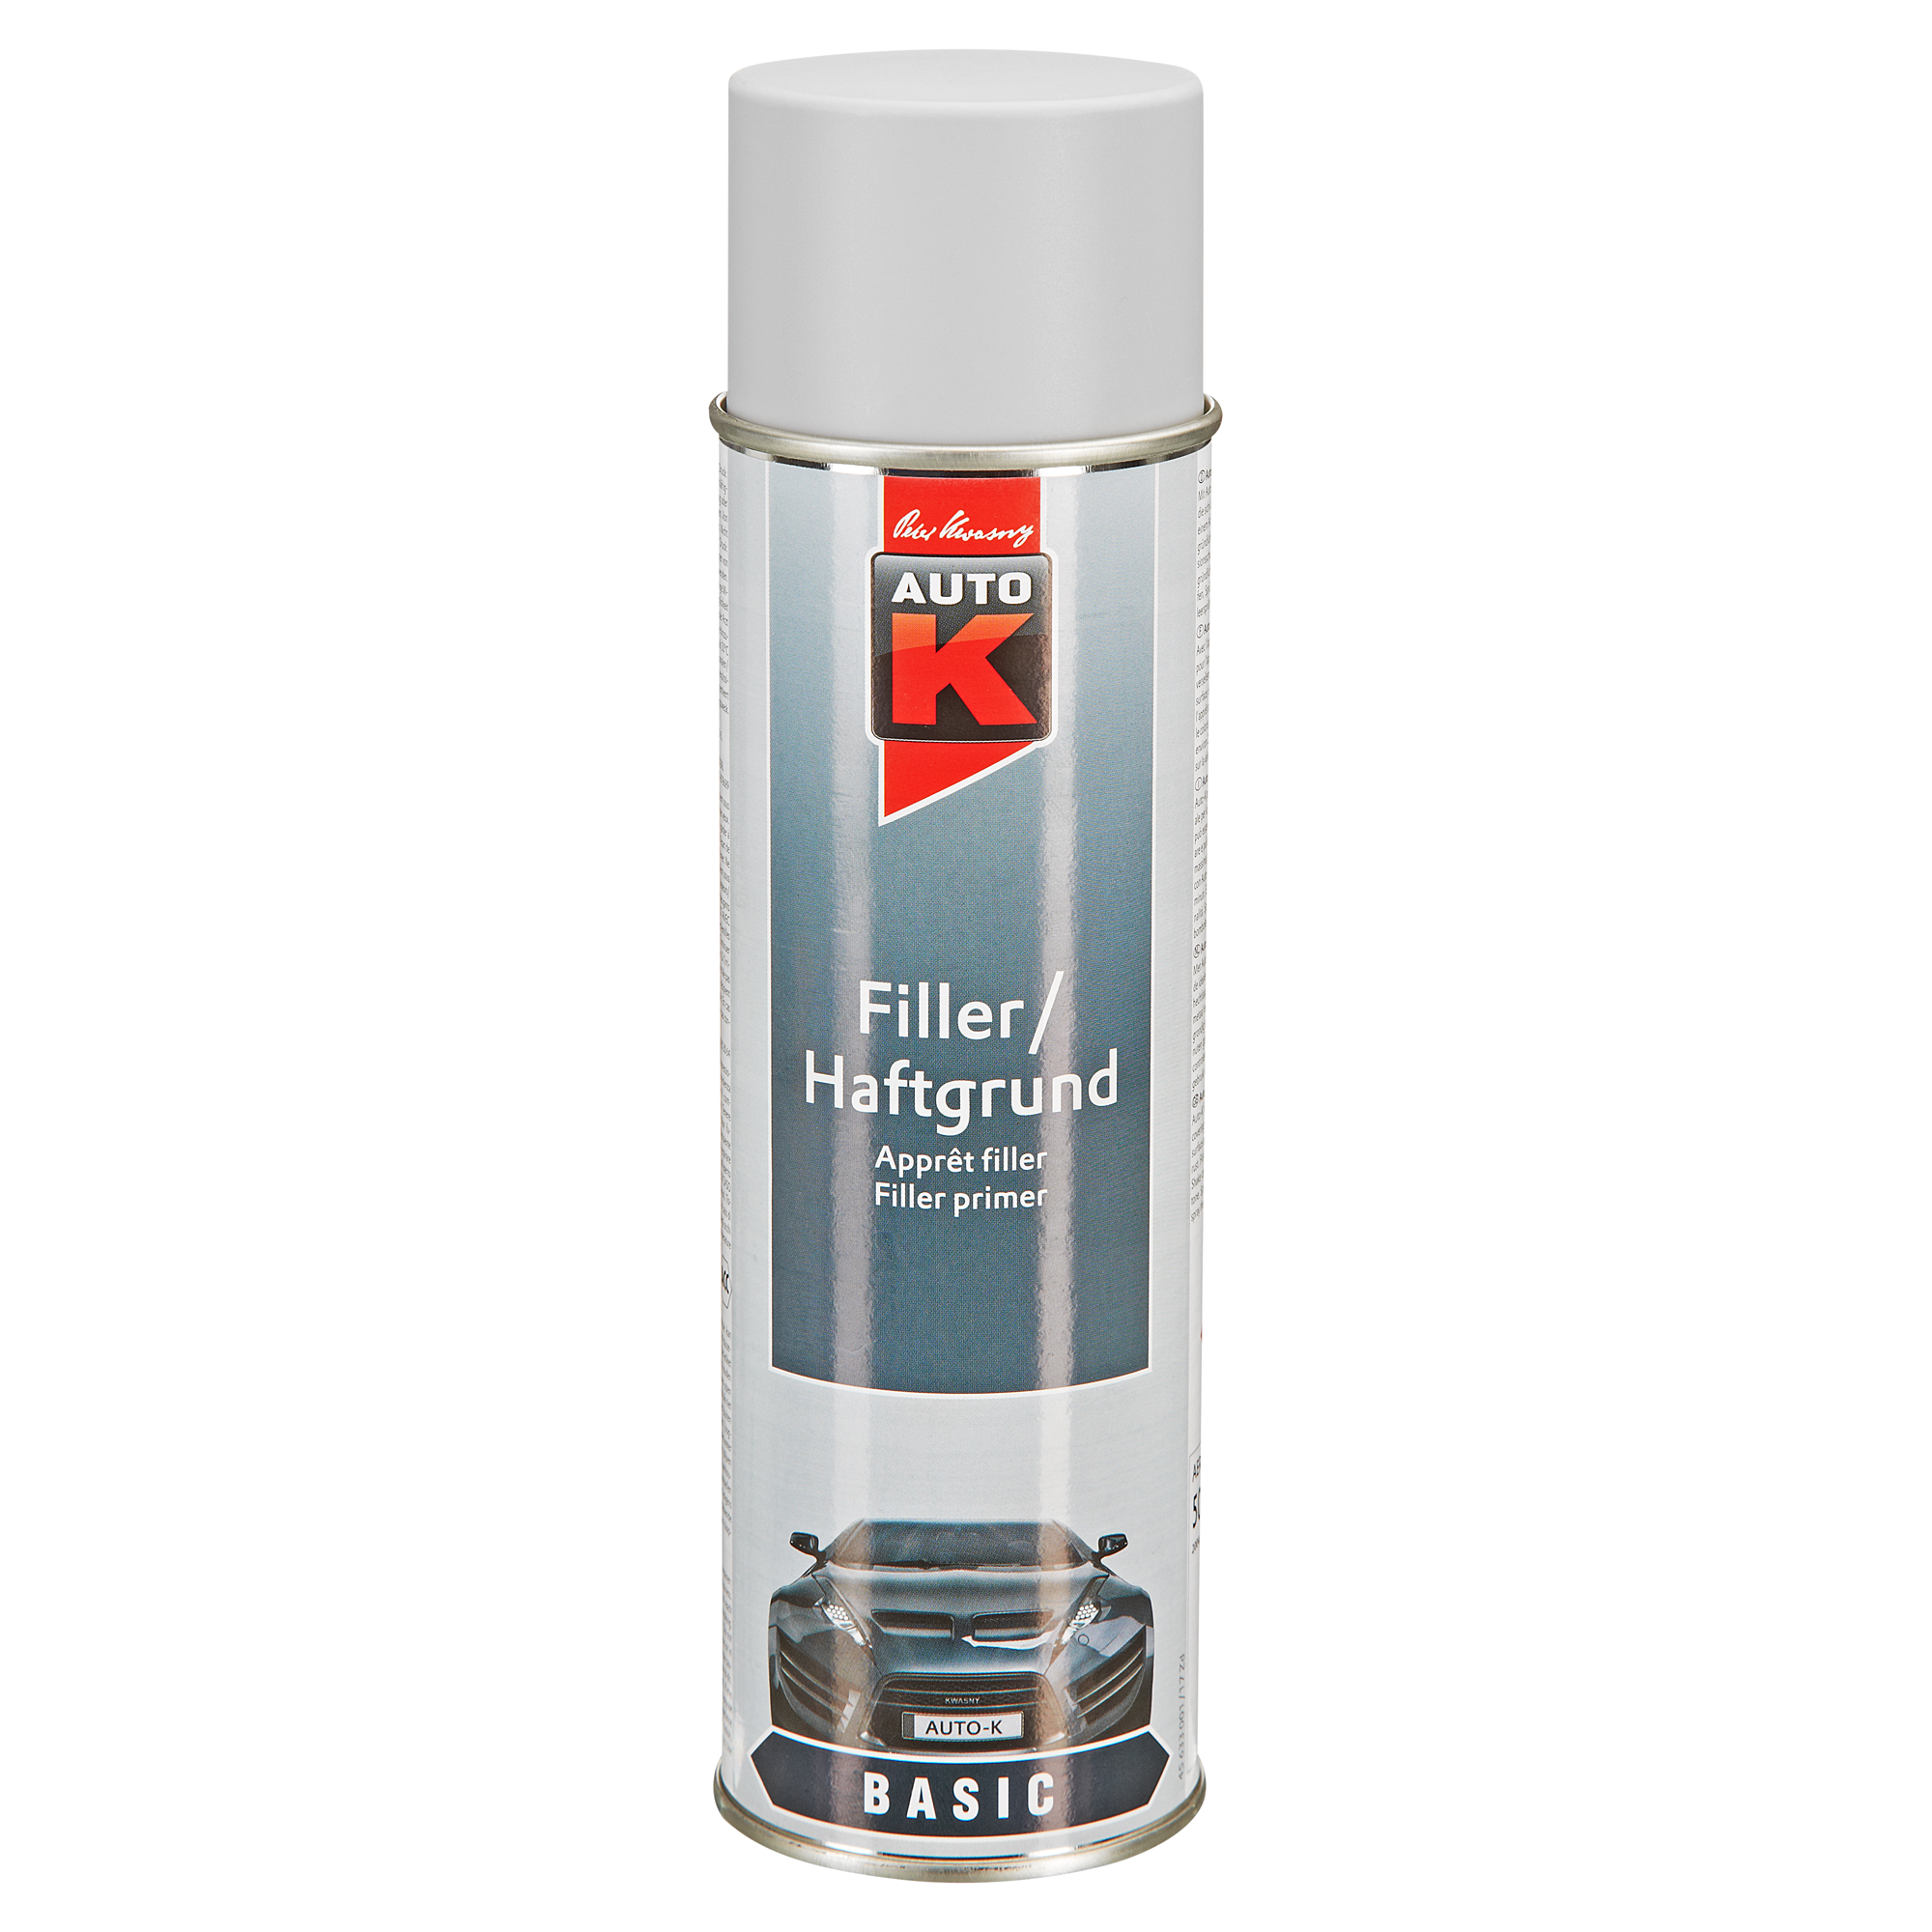 Auto-K Filler/Haftgrund grau 500 ml + product picture